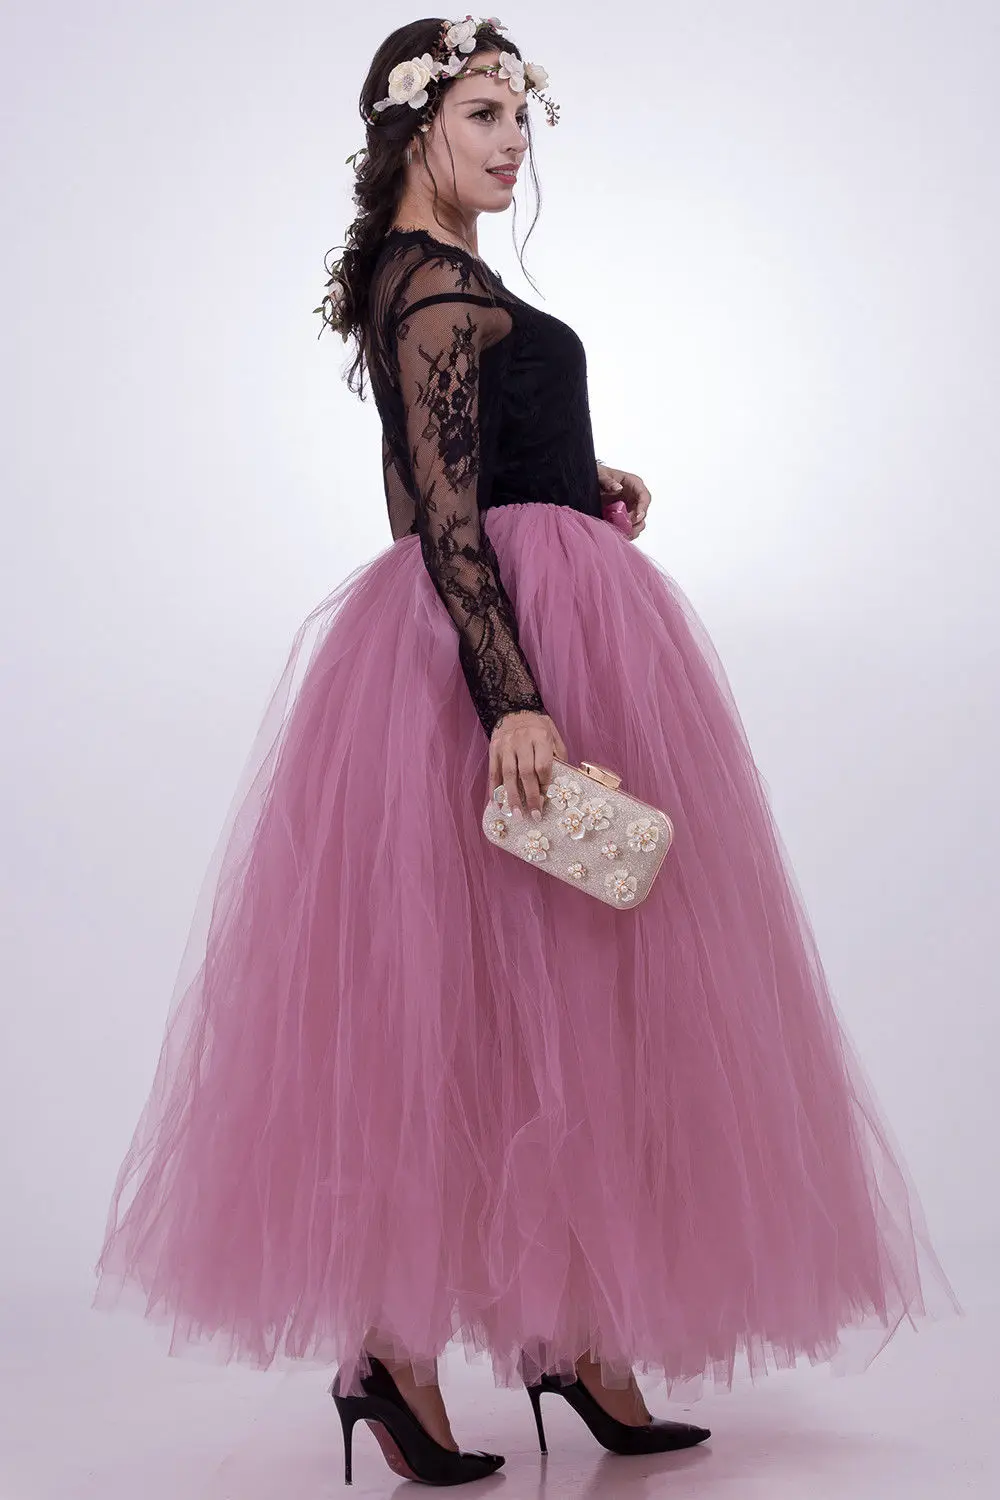 Black Hoopless Long Petticoat Wedding Crinoline Ball Gown Underskirt Layers Tulle Skirt Woman Adult Tutu Bridal Accessories 2020